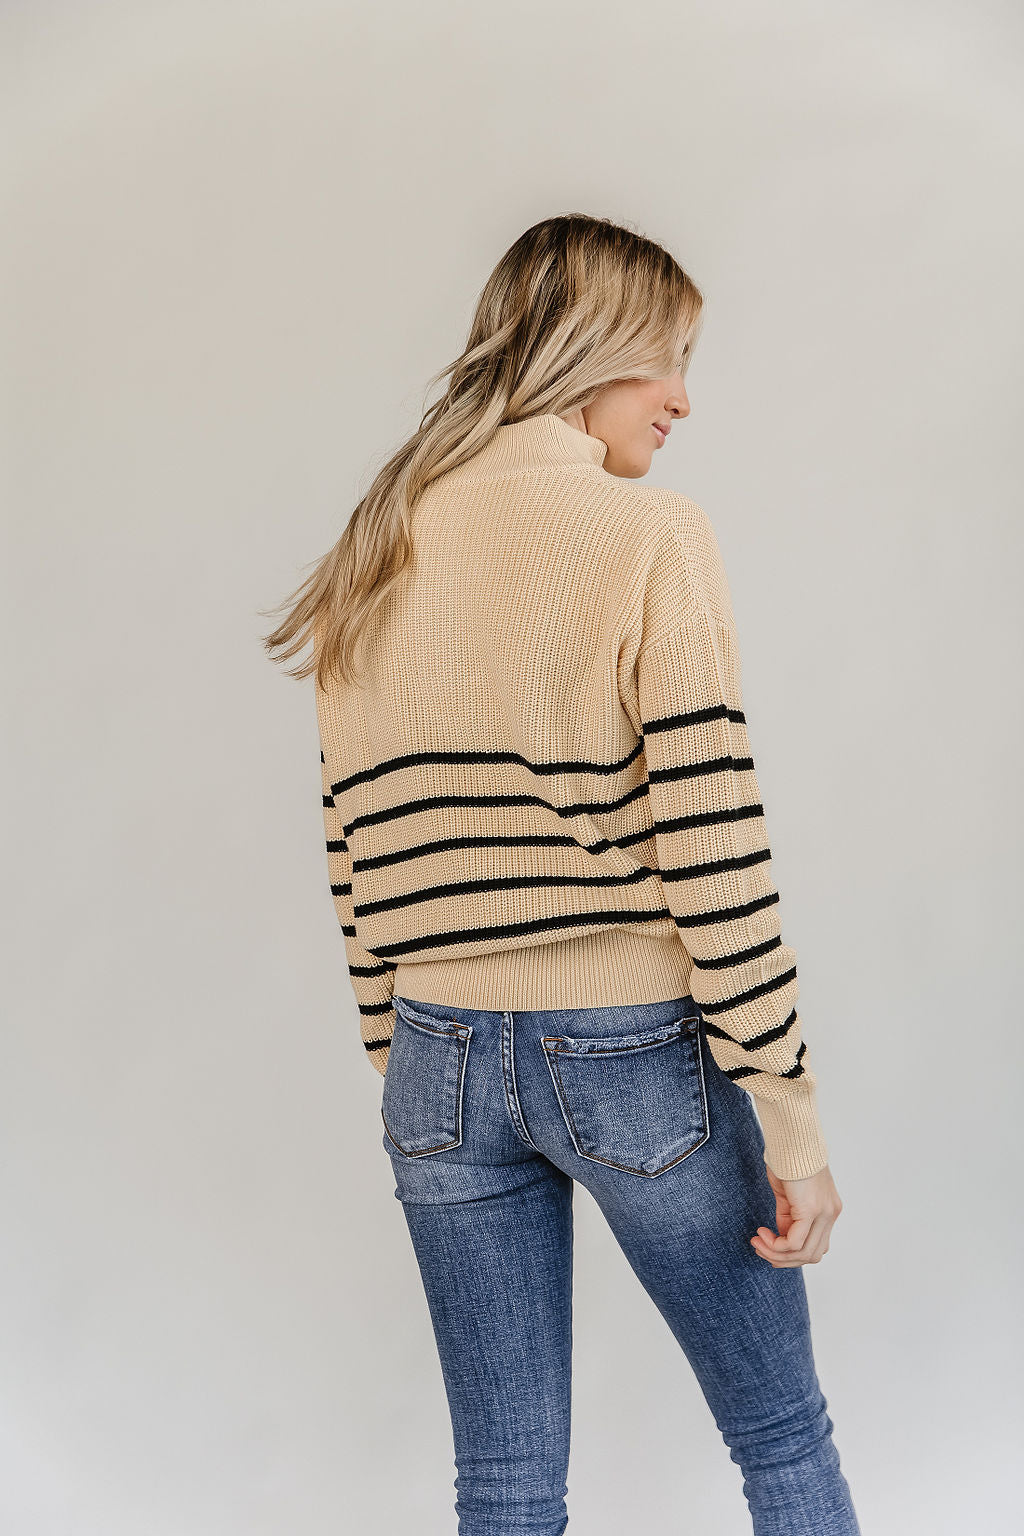 Ampersand Avenue - HalfZip Sweater Cream & Black Stripe